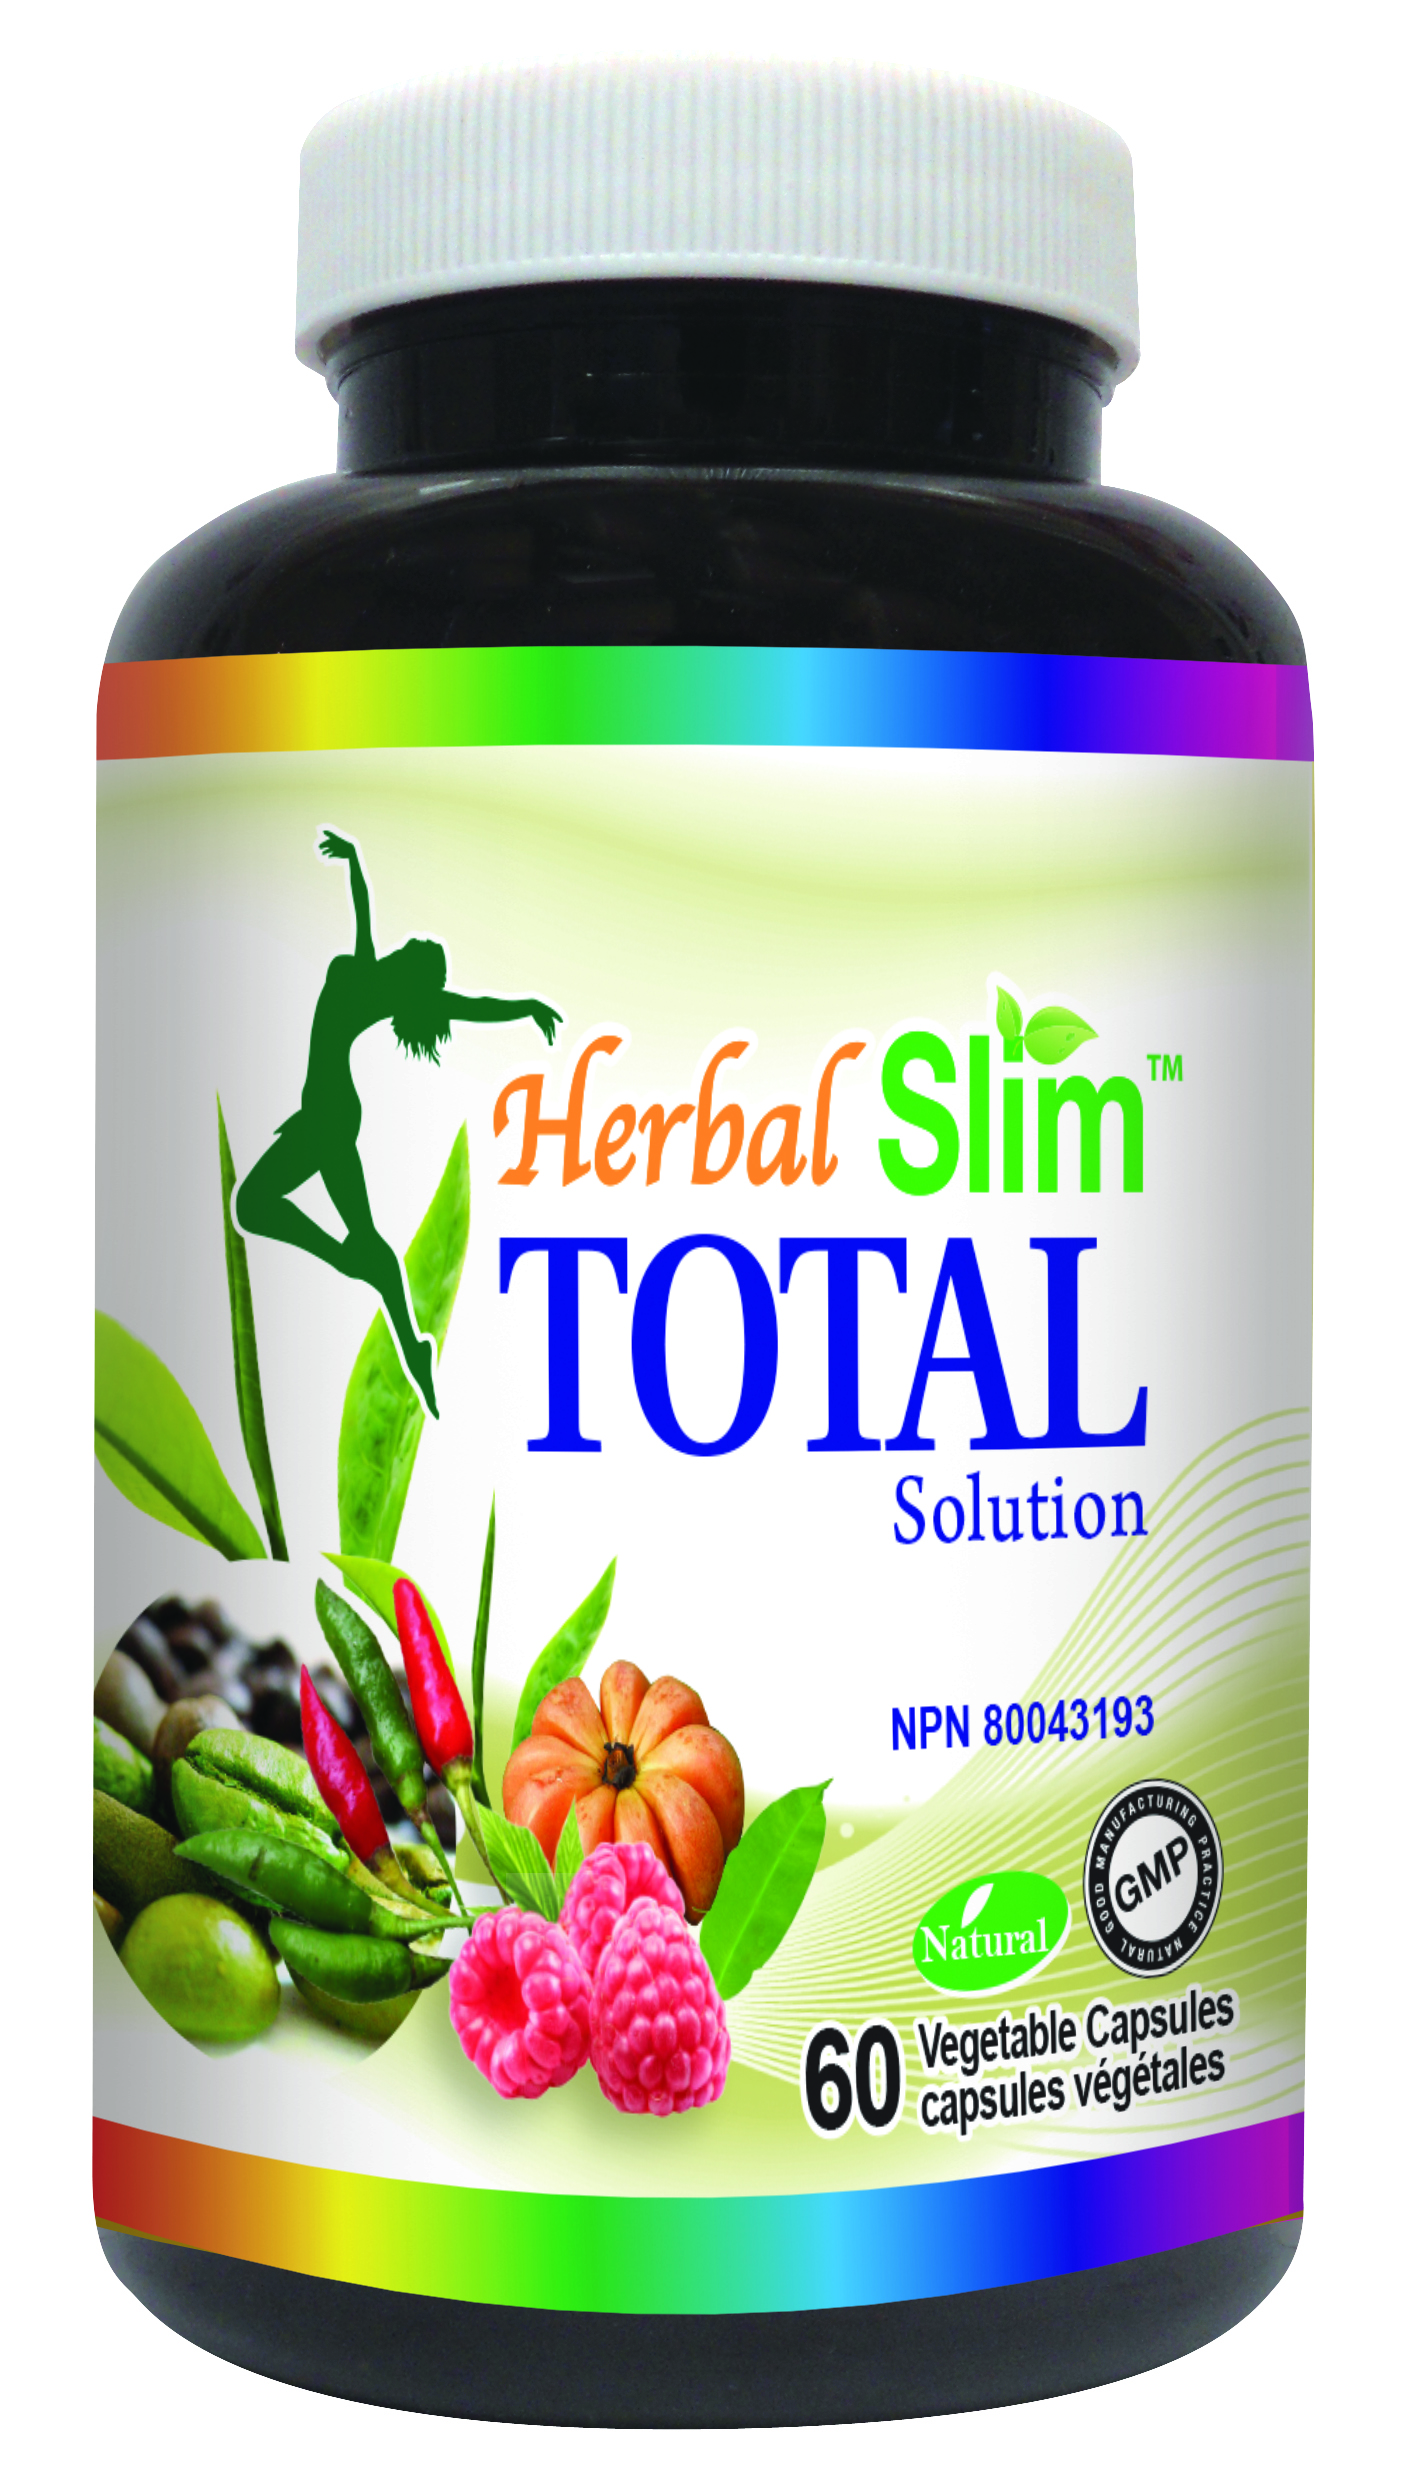 Herbal Slim Total